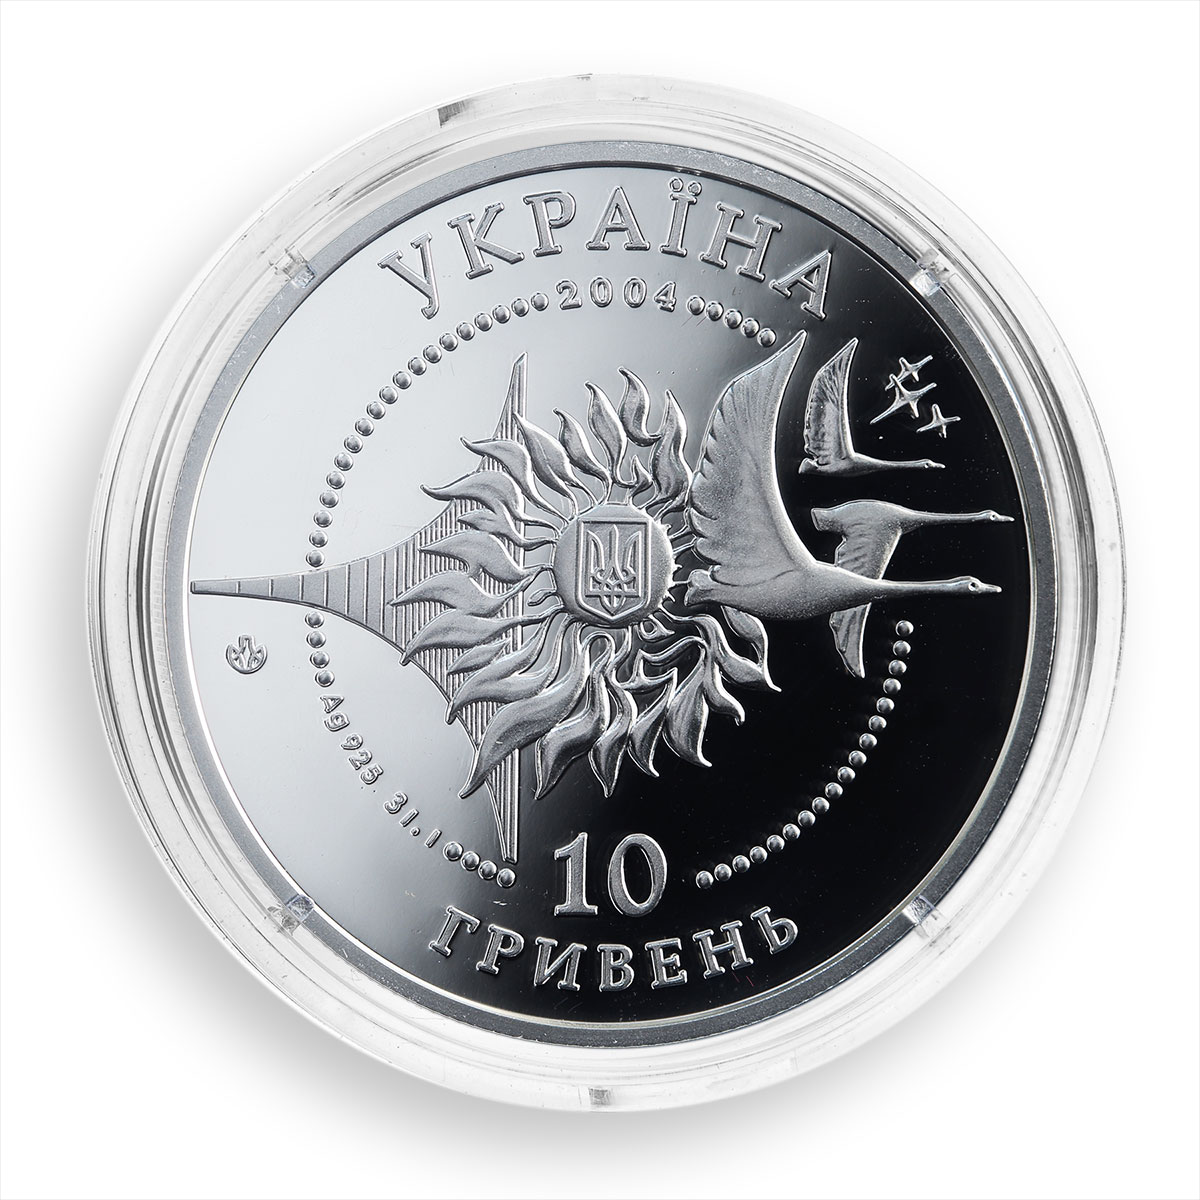 Ukraine 10 hryvnia AN-140 Aircraft Antonov Series Airplanes silver coin 2004